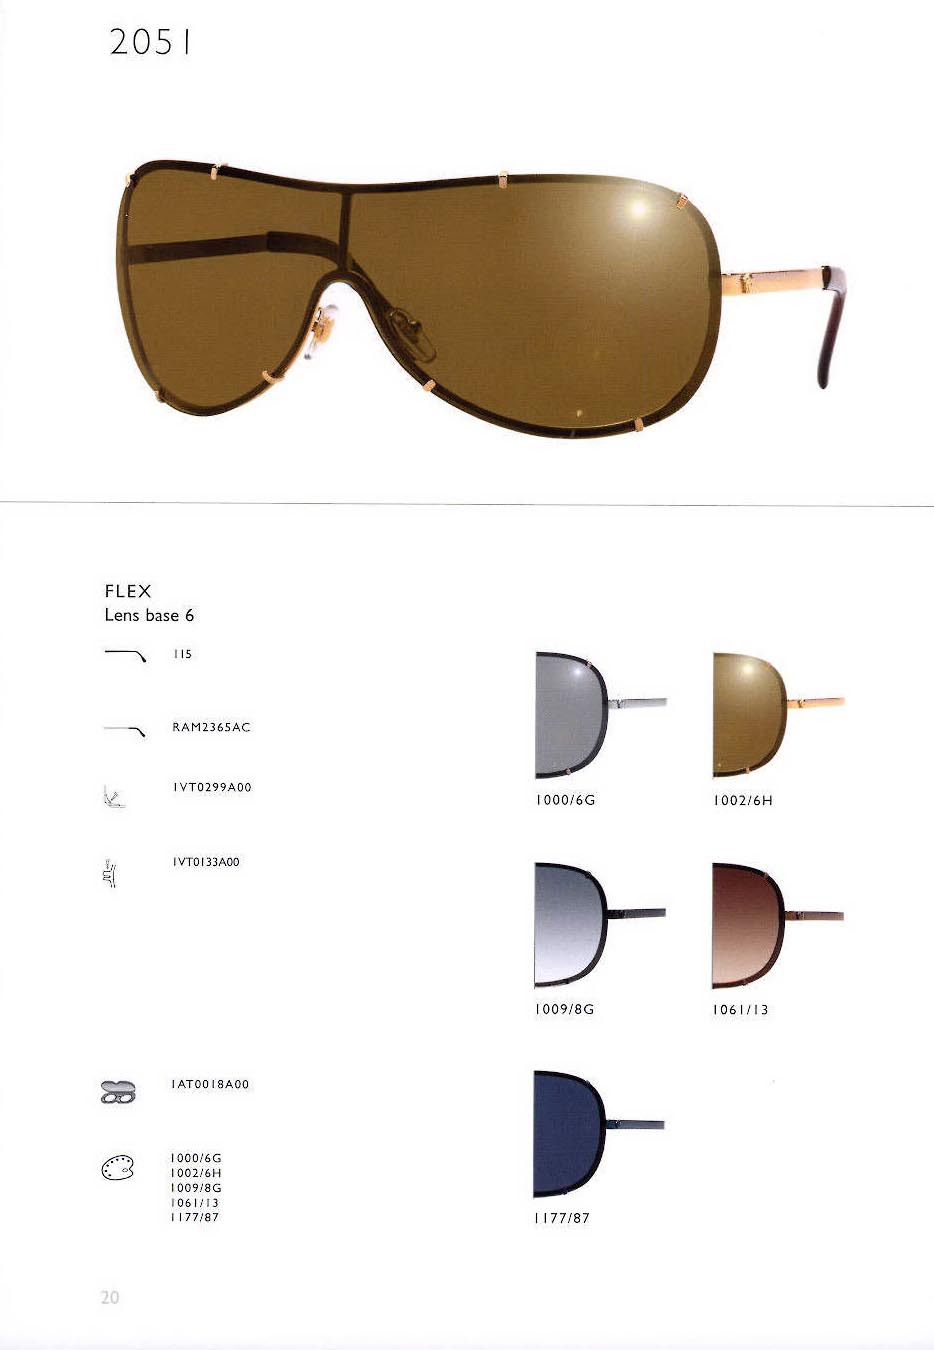 Sunglasses Versace 2051 10006G